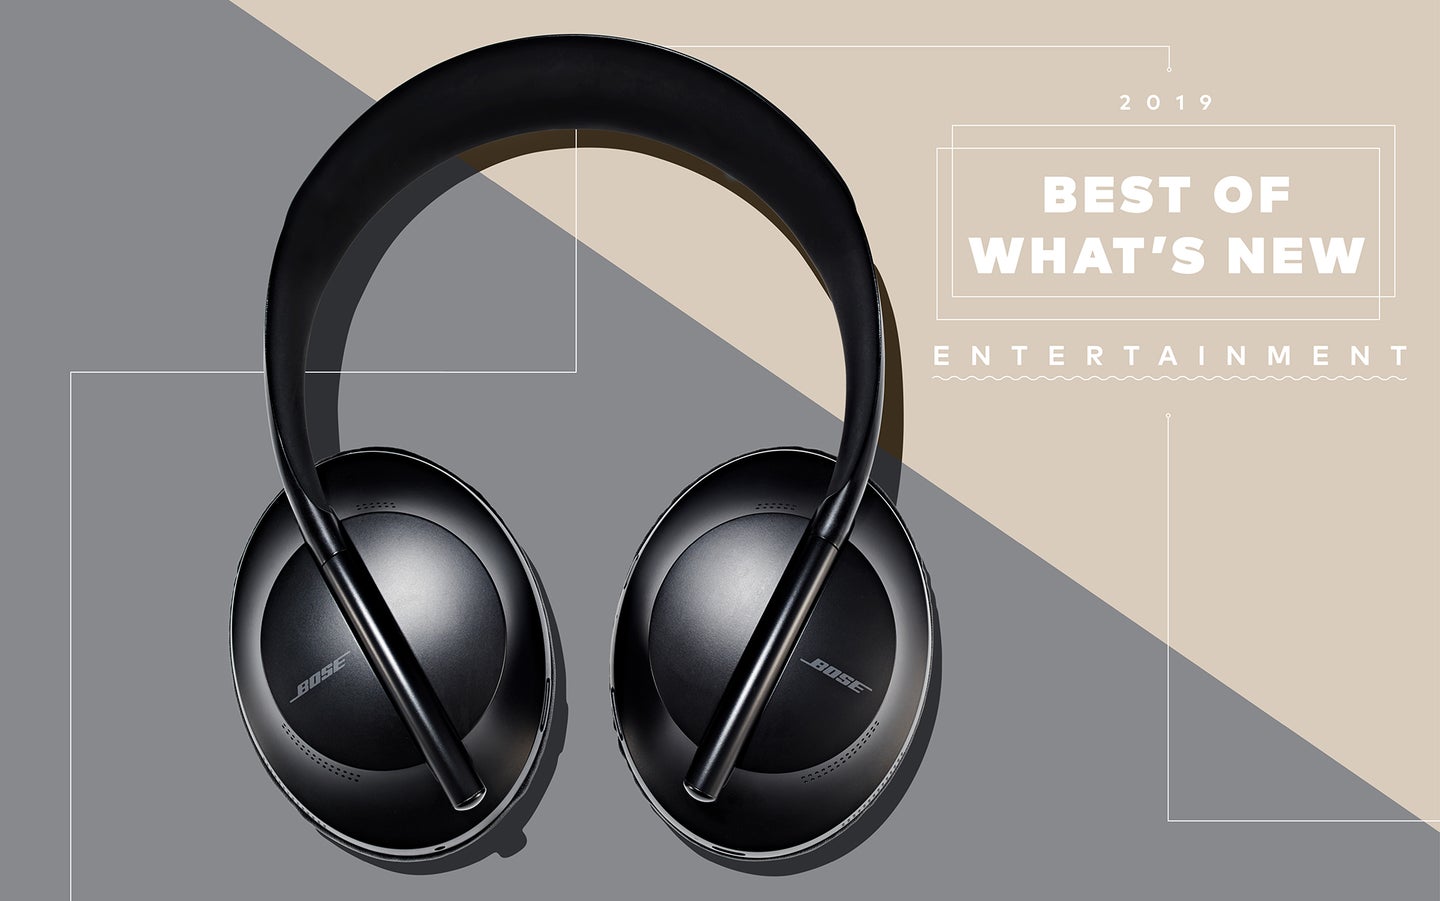 Wireless headphones by Bose